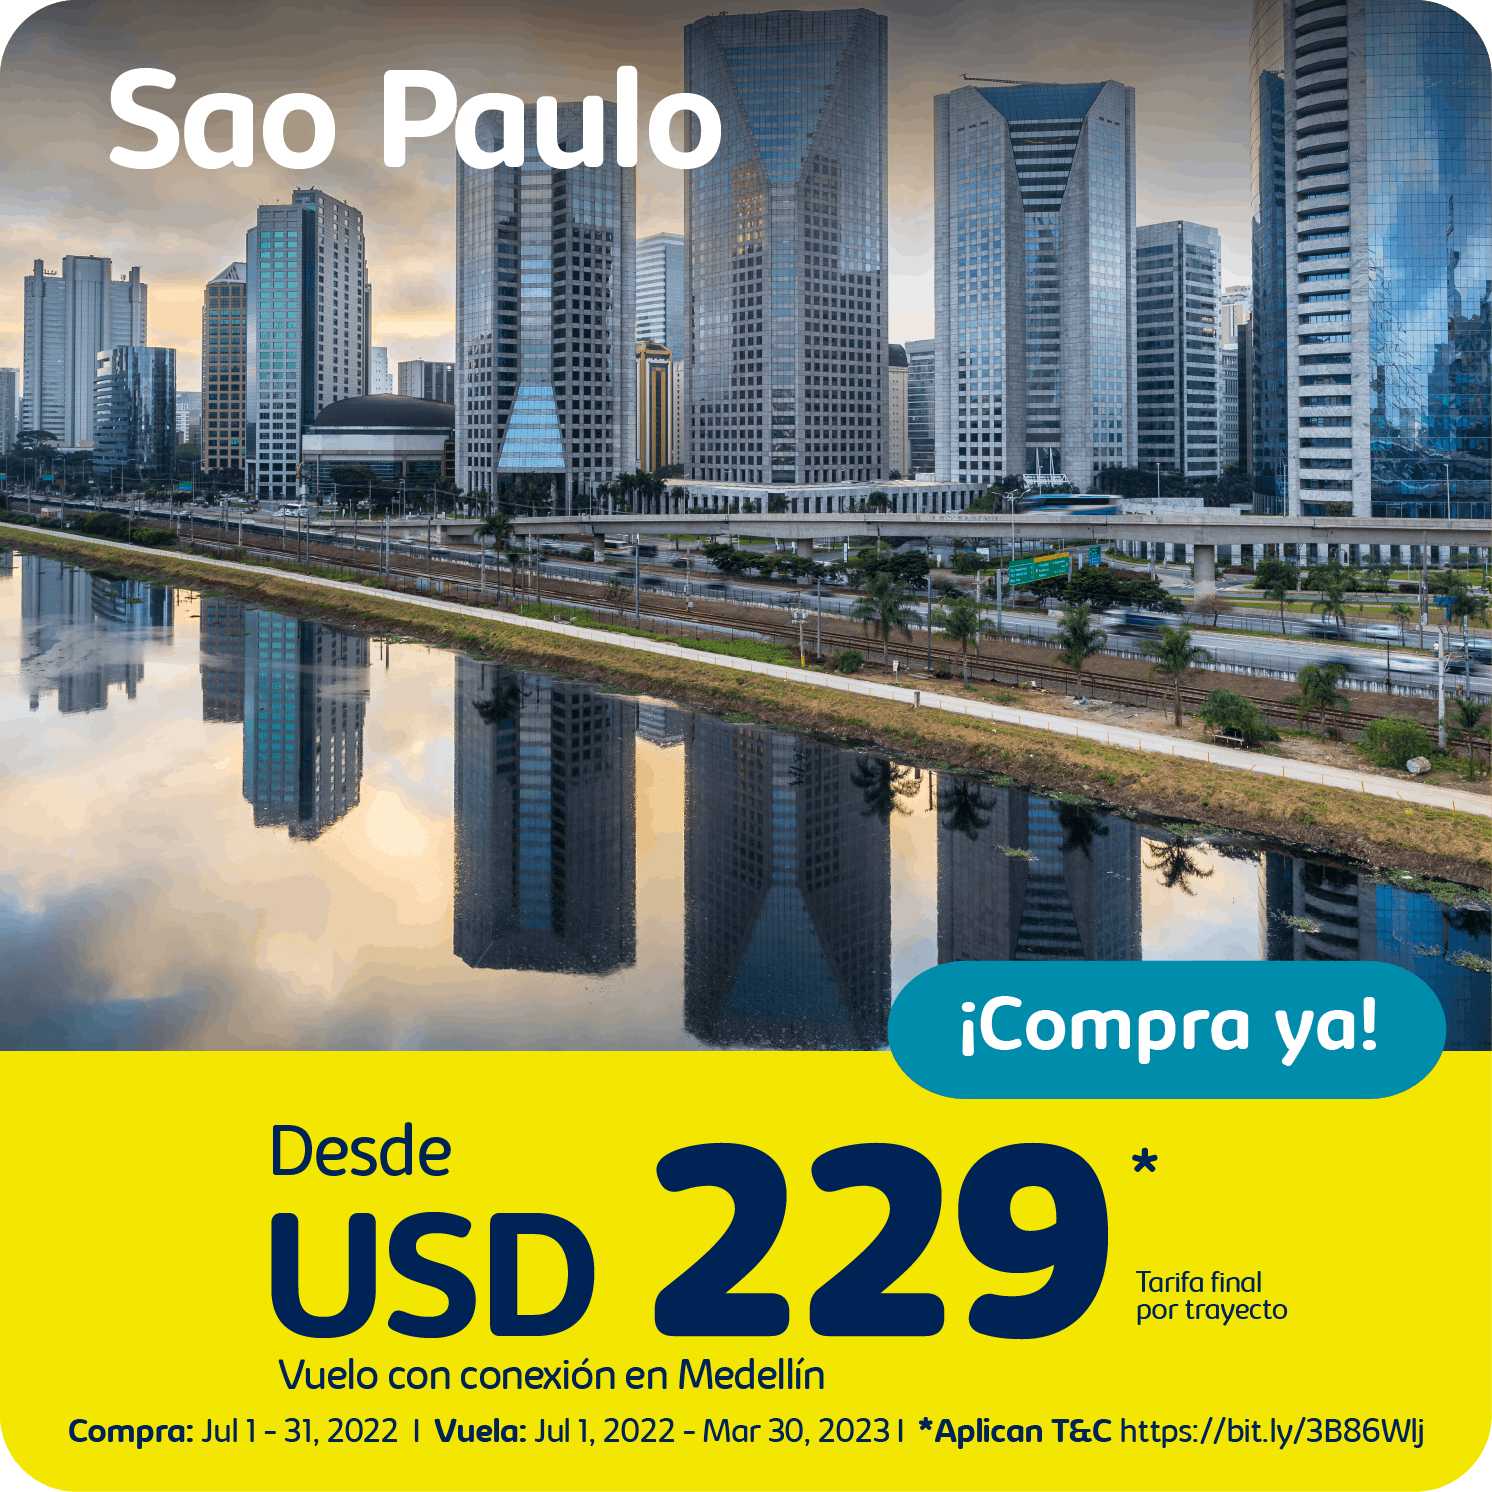 Vuela a Sao Paulo